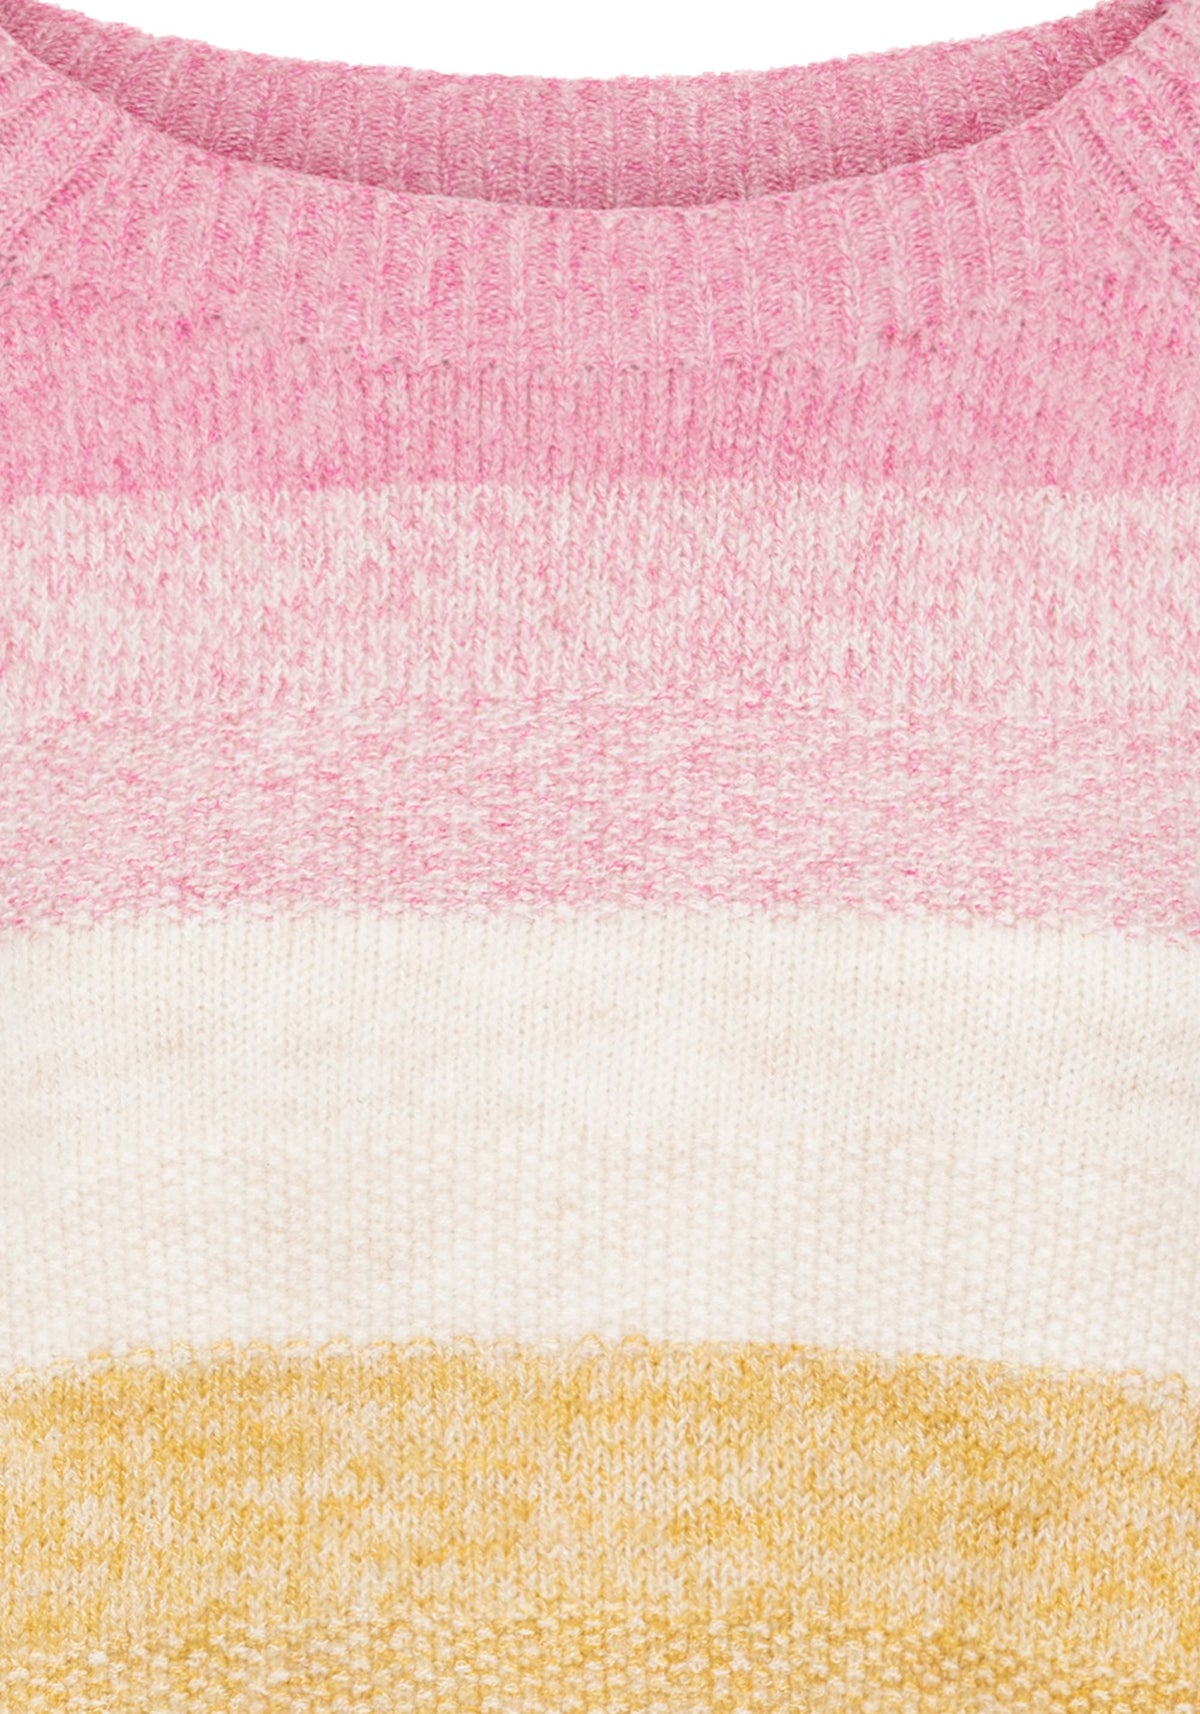 Long Sleeve Combo Yarn Block Stripe Sweater